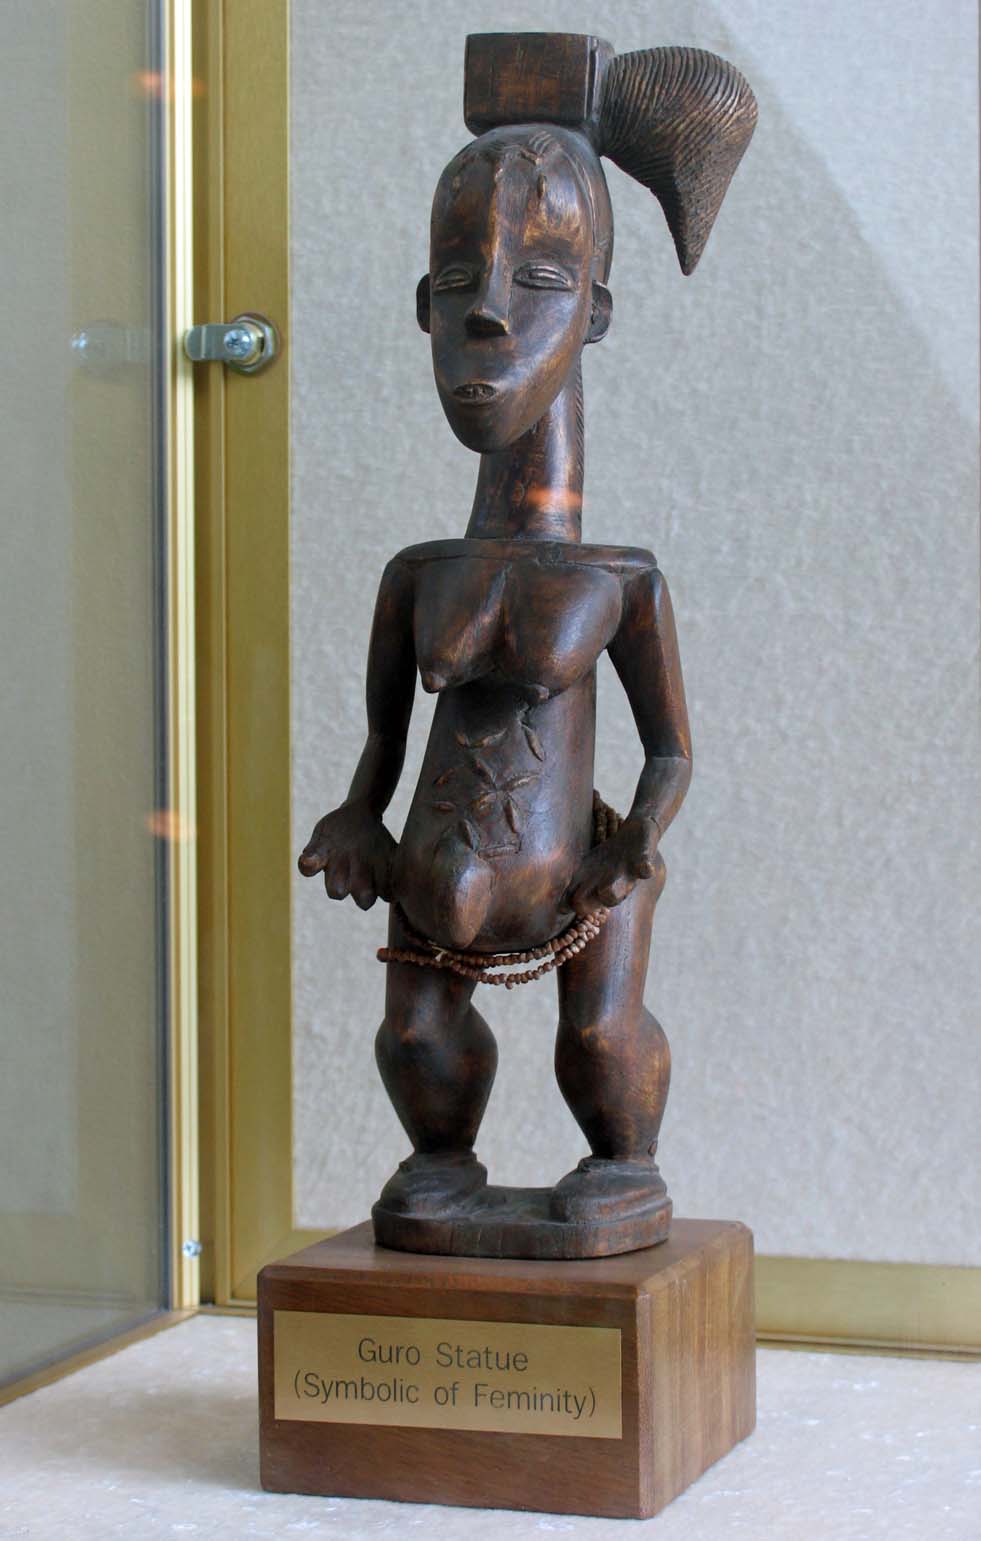 Gouro雕塑（女性气质的象征）, UNNY259G, 2003, 科特迪瓦